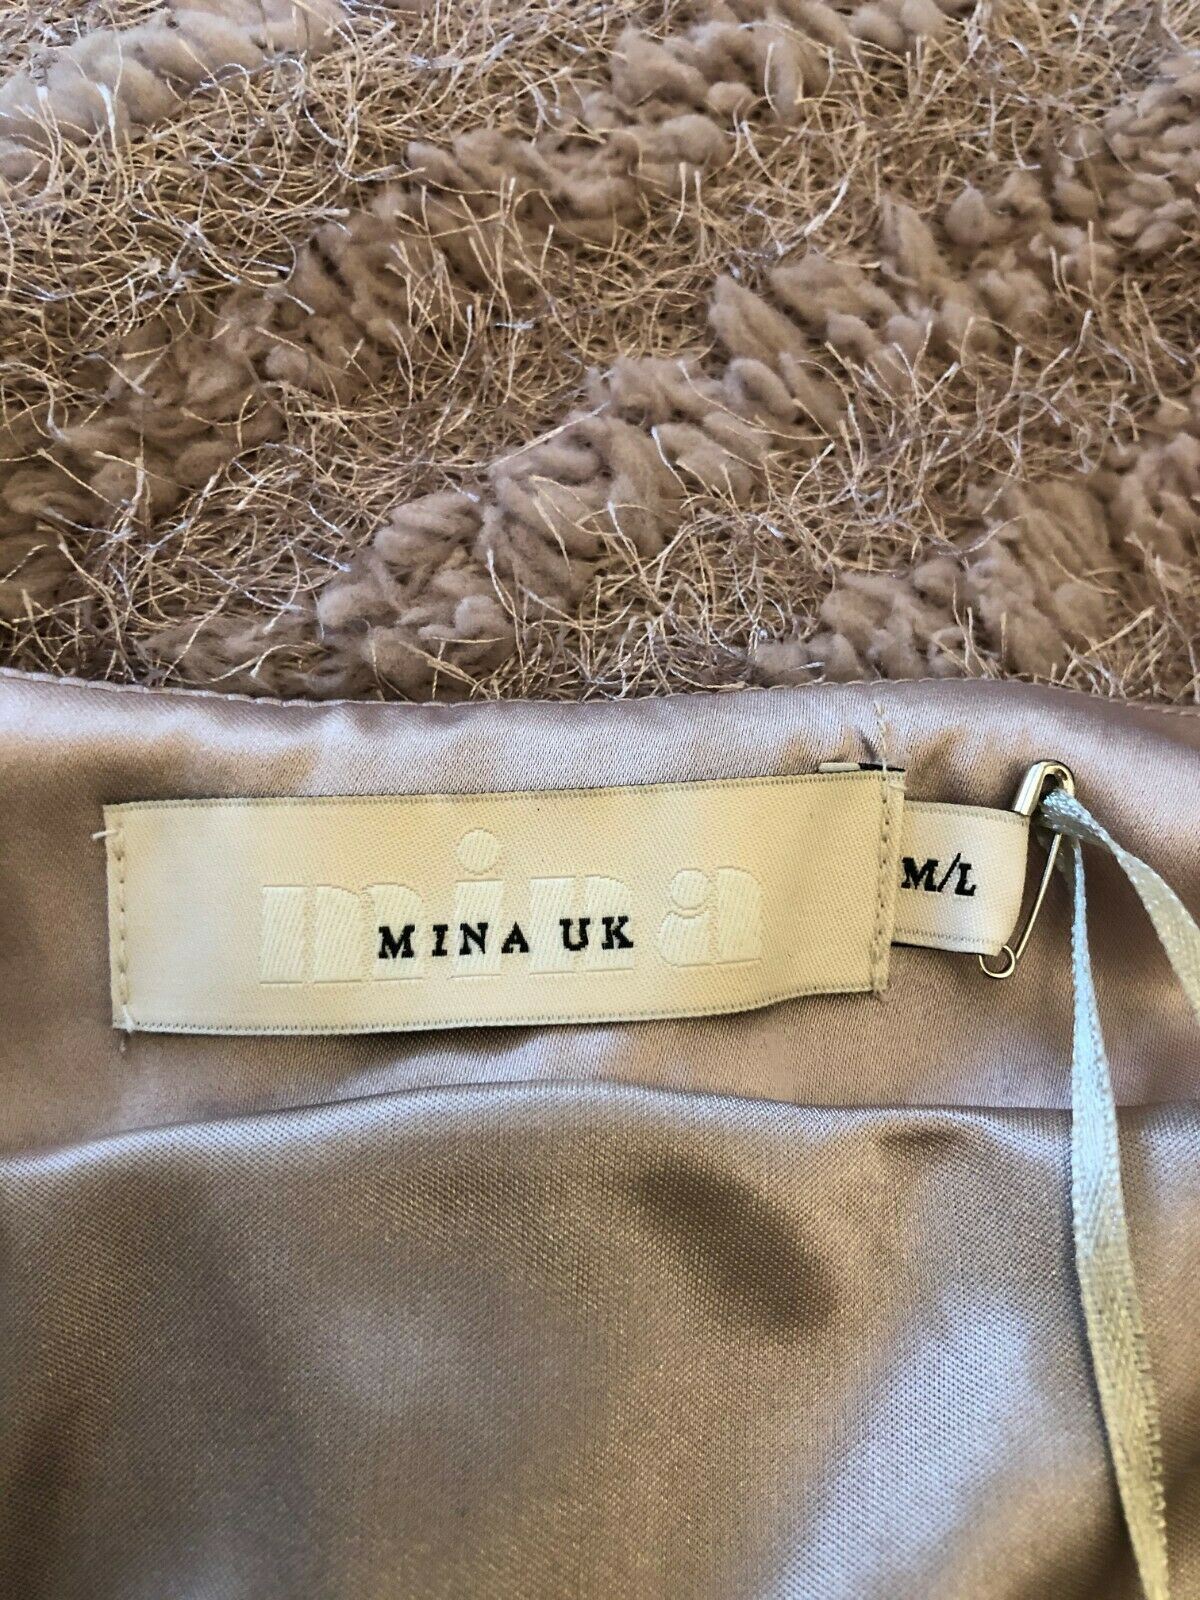 Mina UK Champagne Fluffy Knit with Satin Trim Mini Dress M/L UK 10 US 6 EU 38 Timeless Fashions